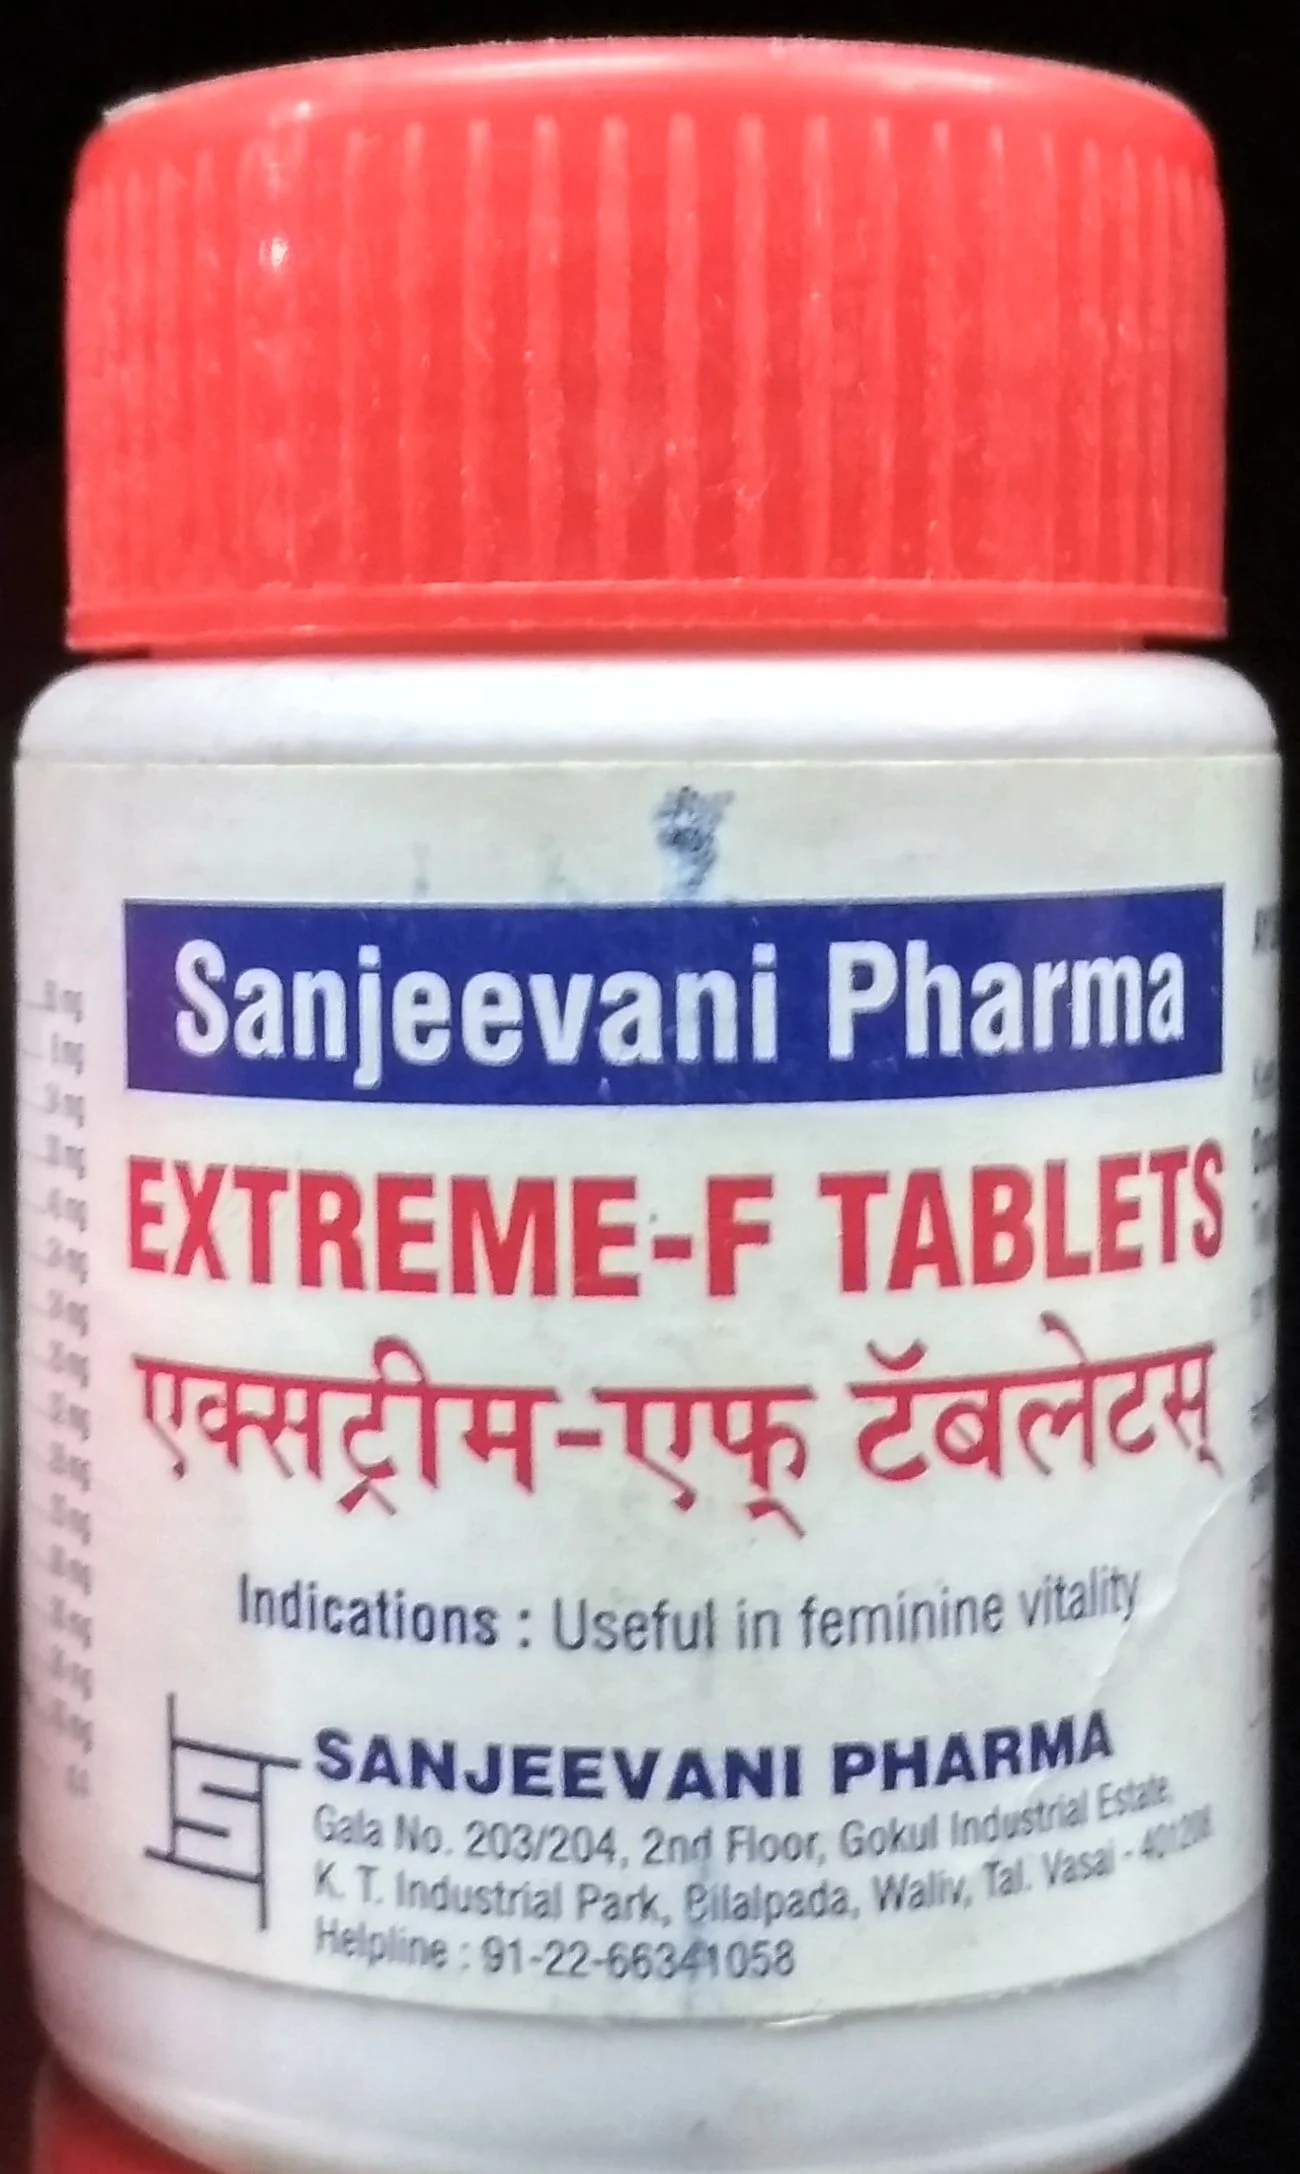 Extreme-F 30tab upto 20% off sanjeevani pharma mumbai